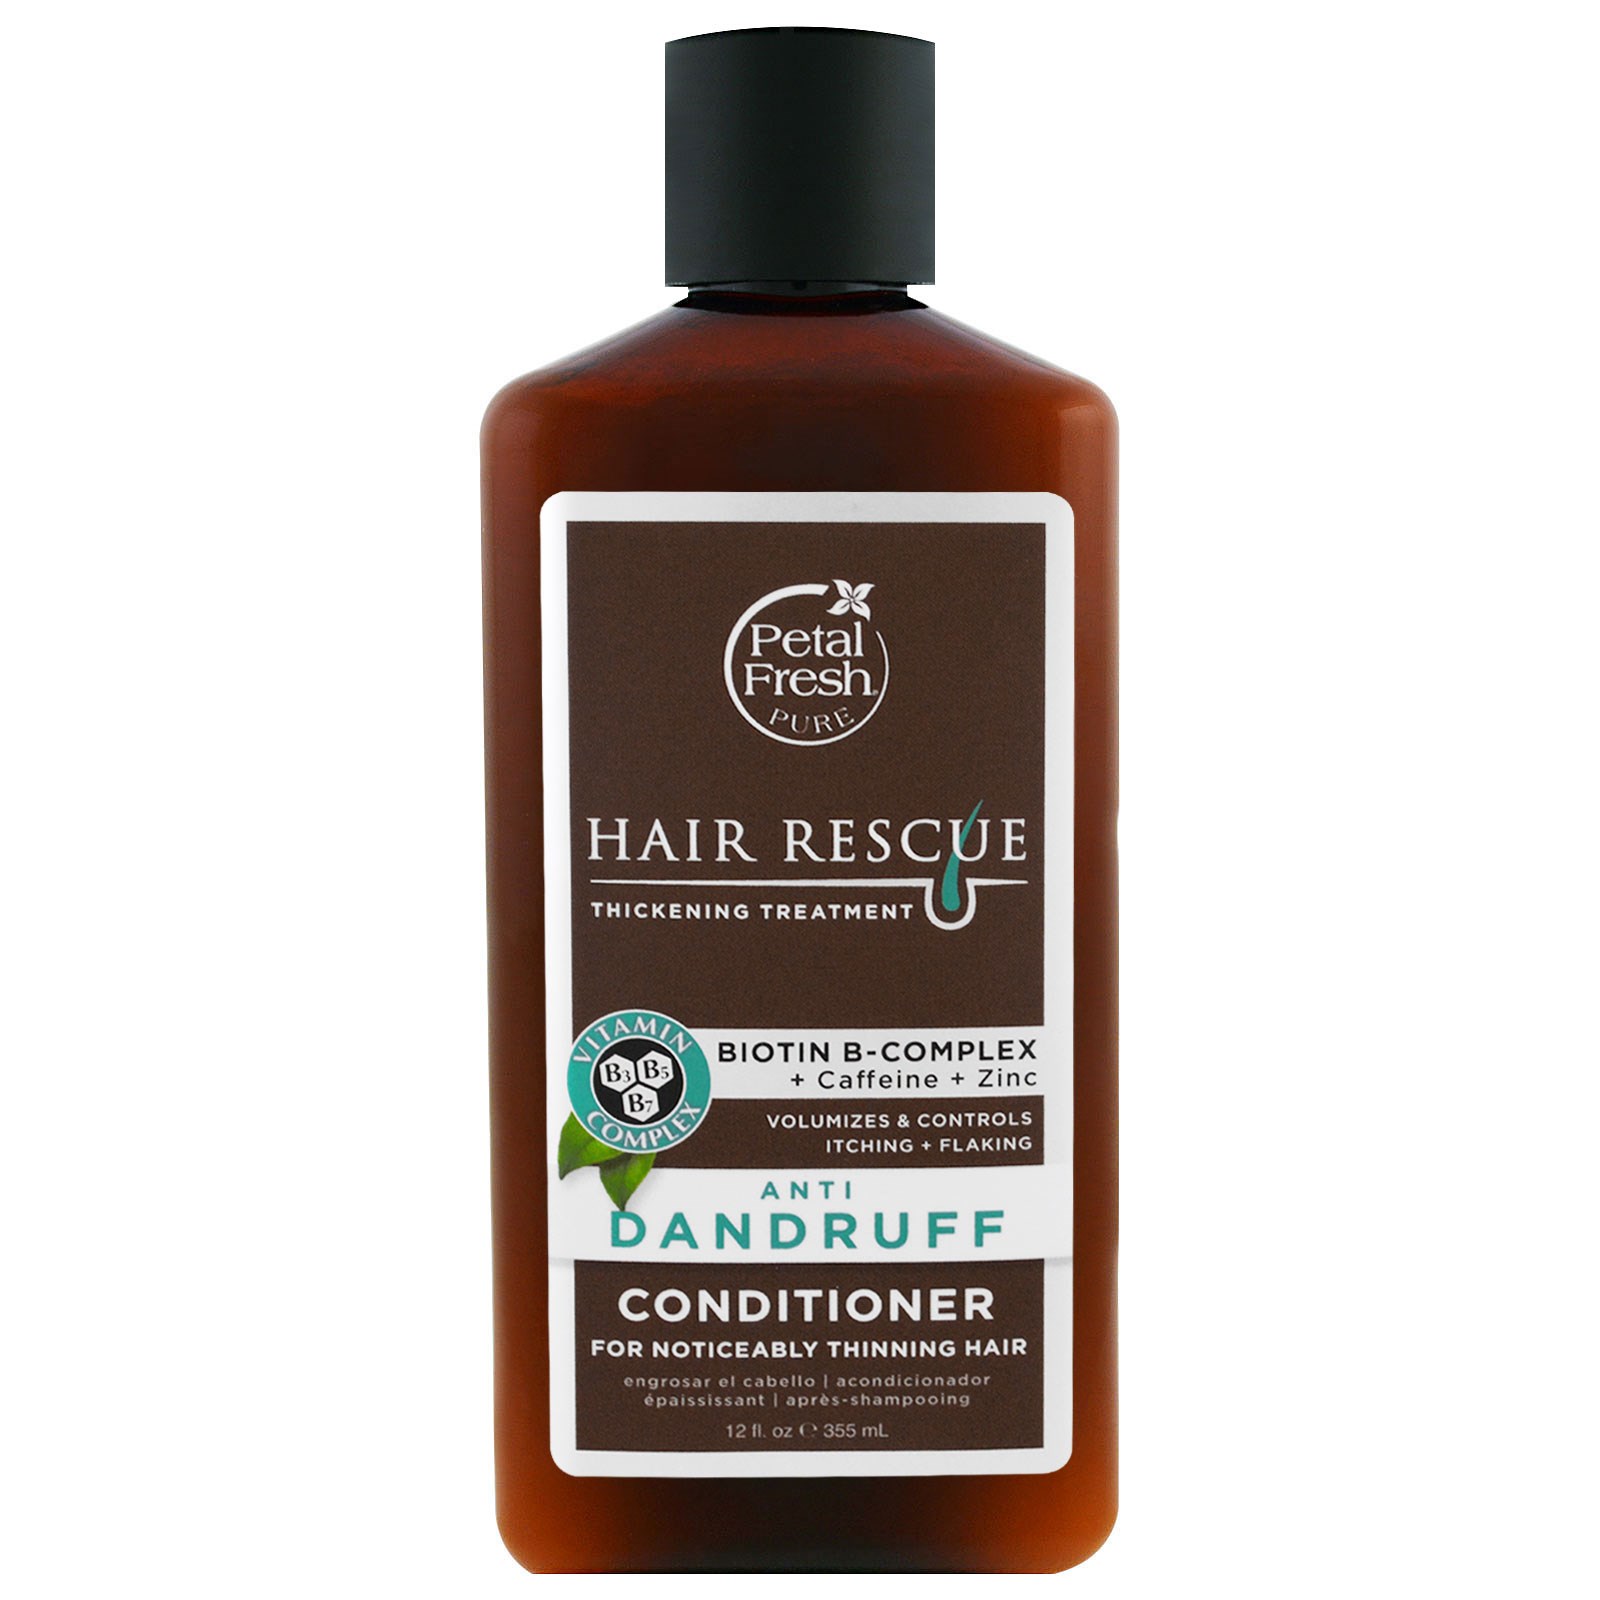 Petal Fresh Hair Rescue Anti Dandruff Conditioner 355ml - Dandruff